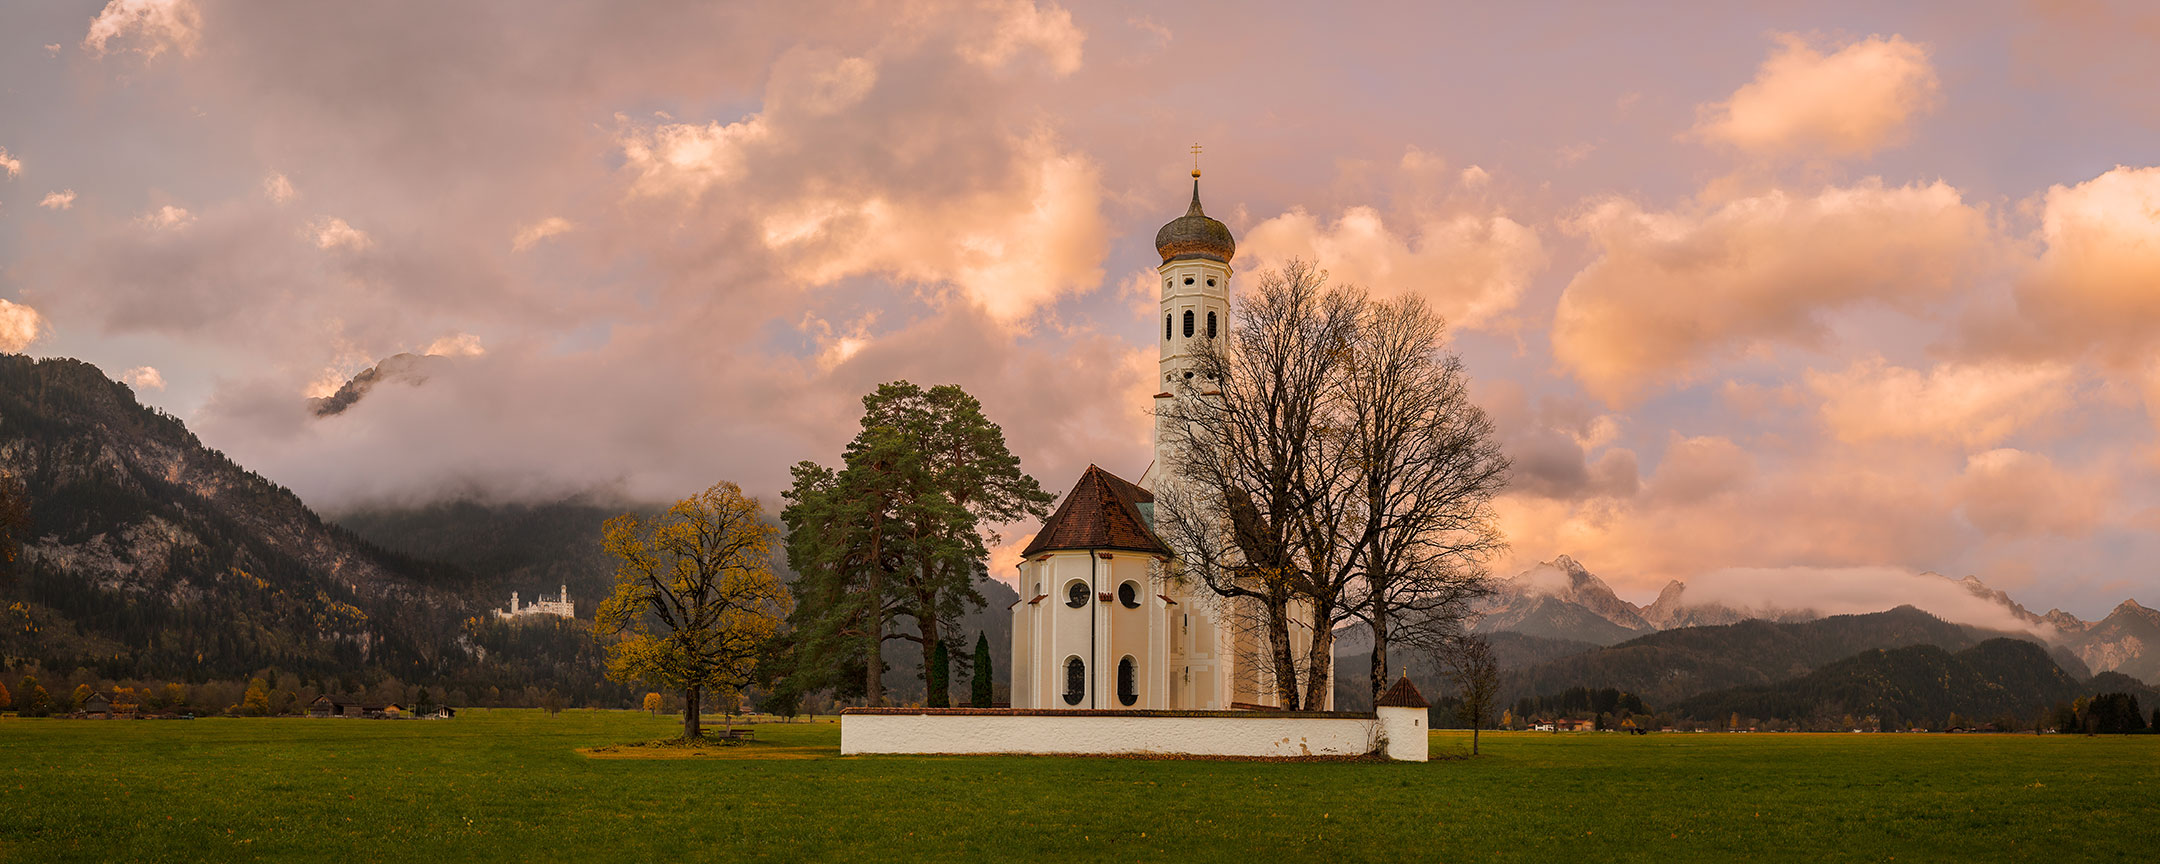 A cloudy sunrise at Eglise St Coloman, Schwangau, Germany